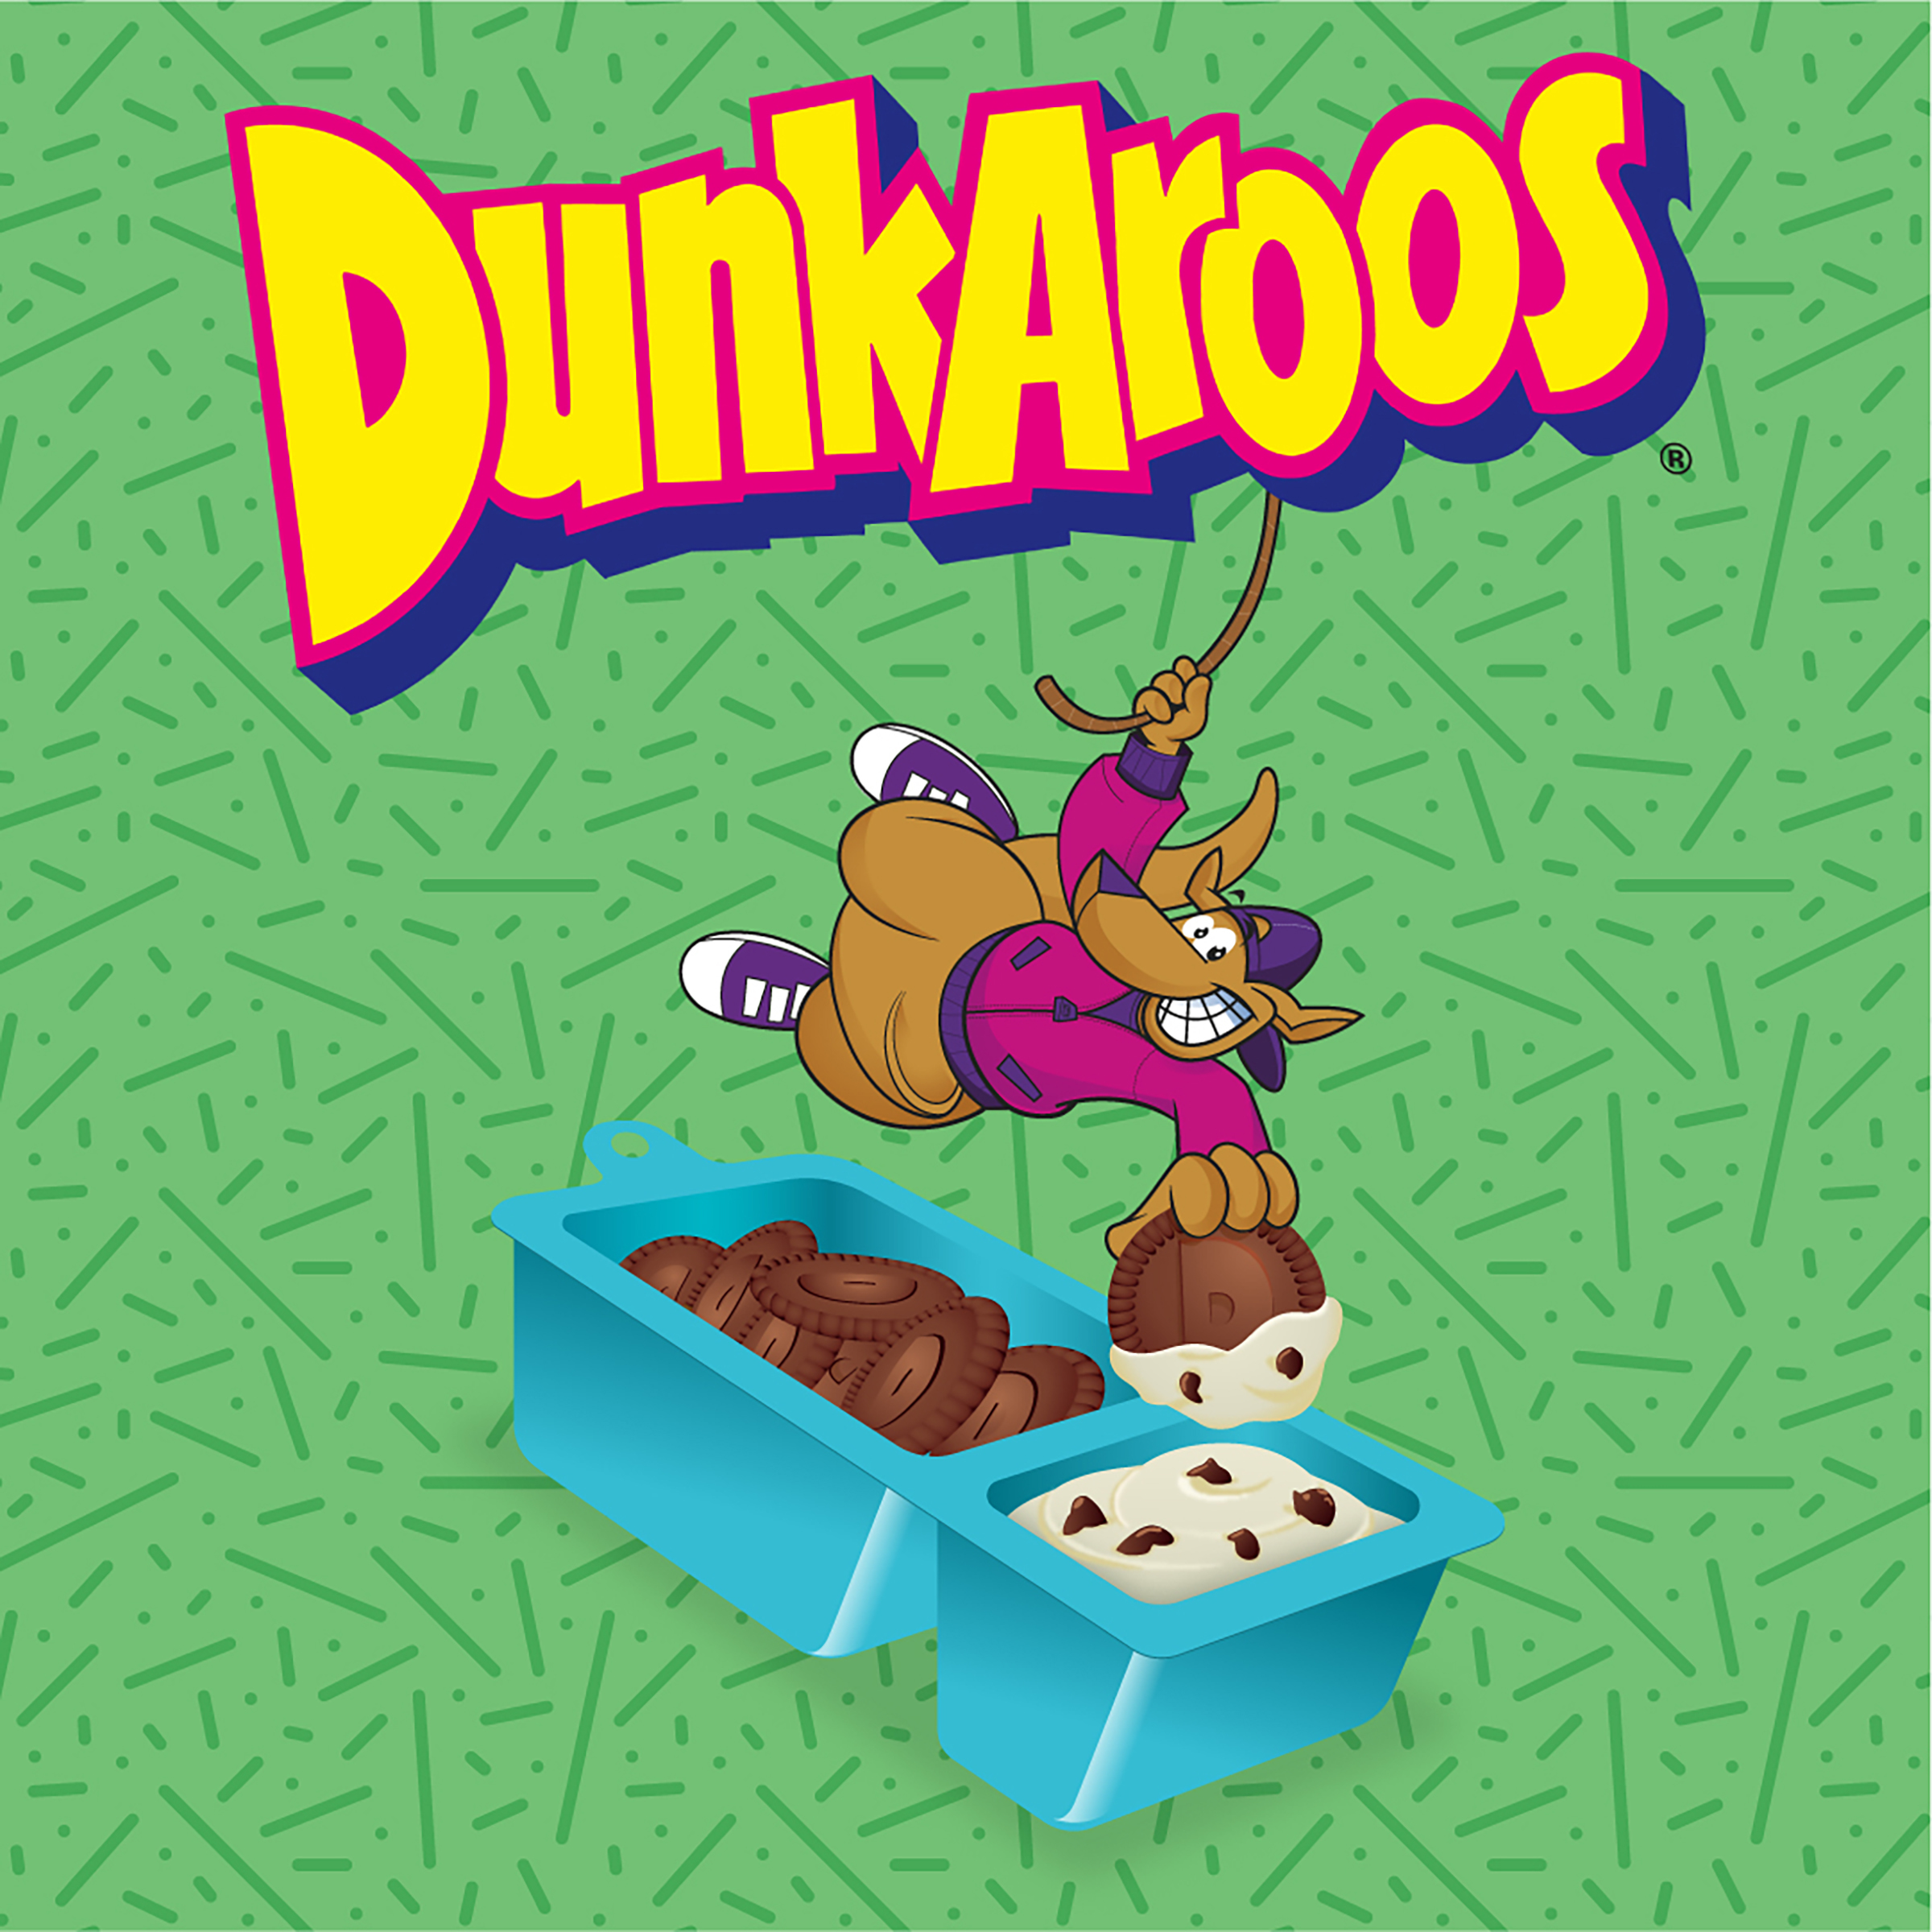 Dunkaroos kangaroo dipping chocolate cookies into vanilla chocolate chip frosting